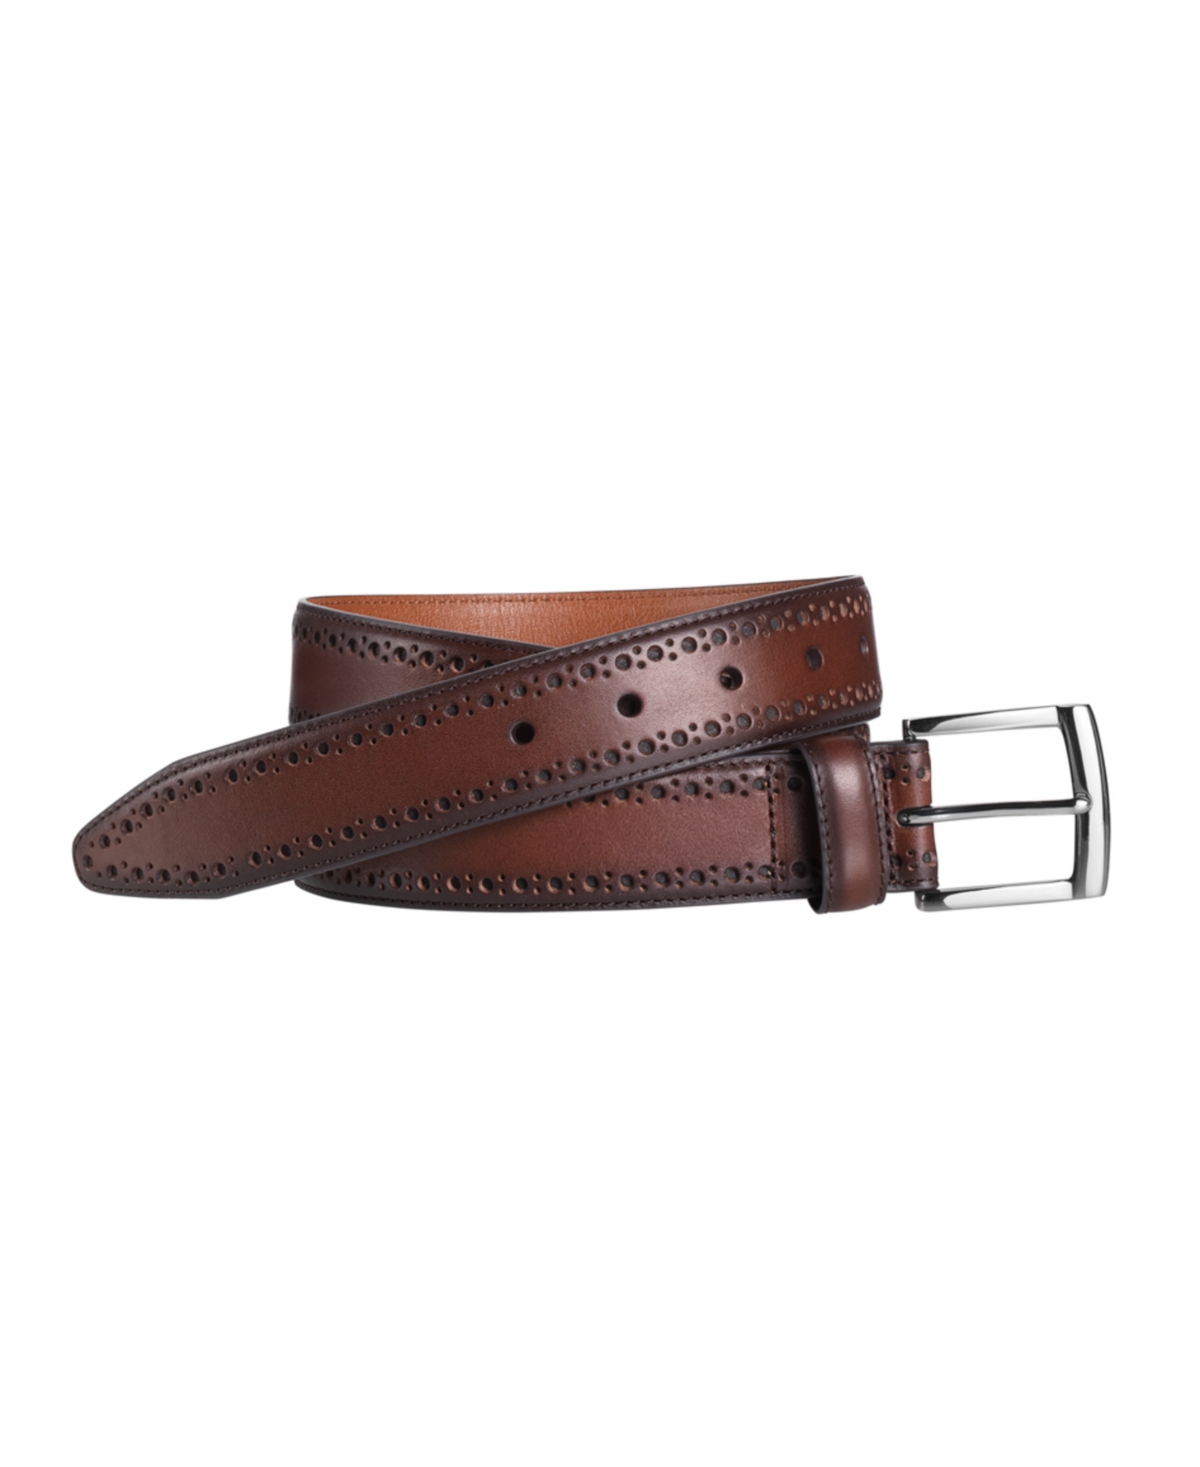 Men's Perfed Edge Belt - Mahogany Leather